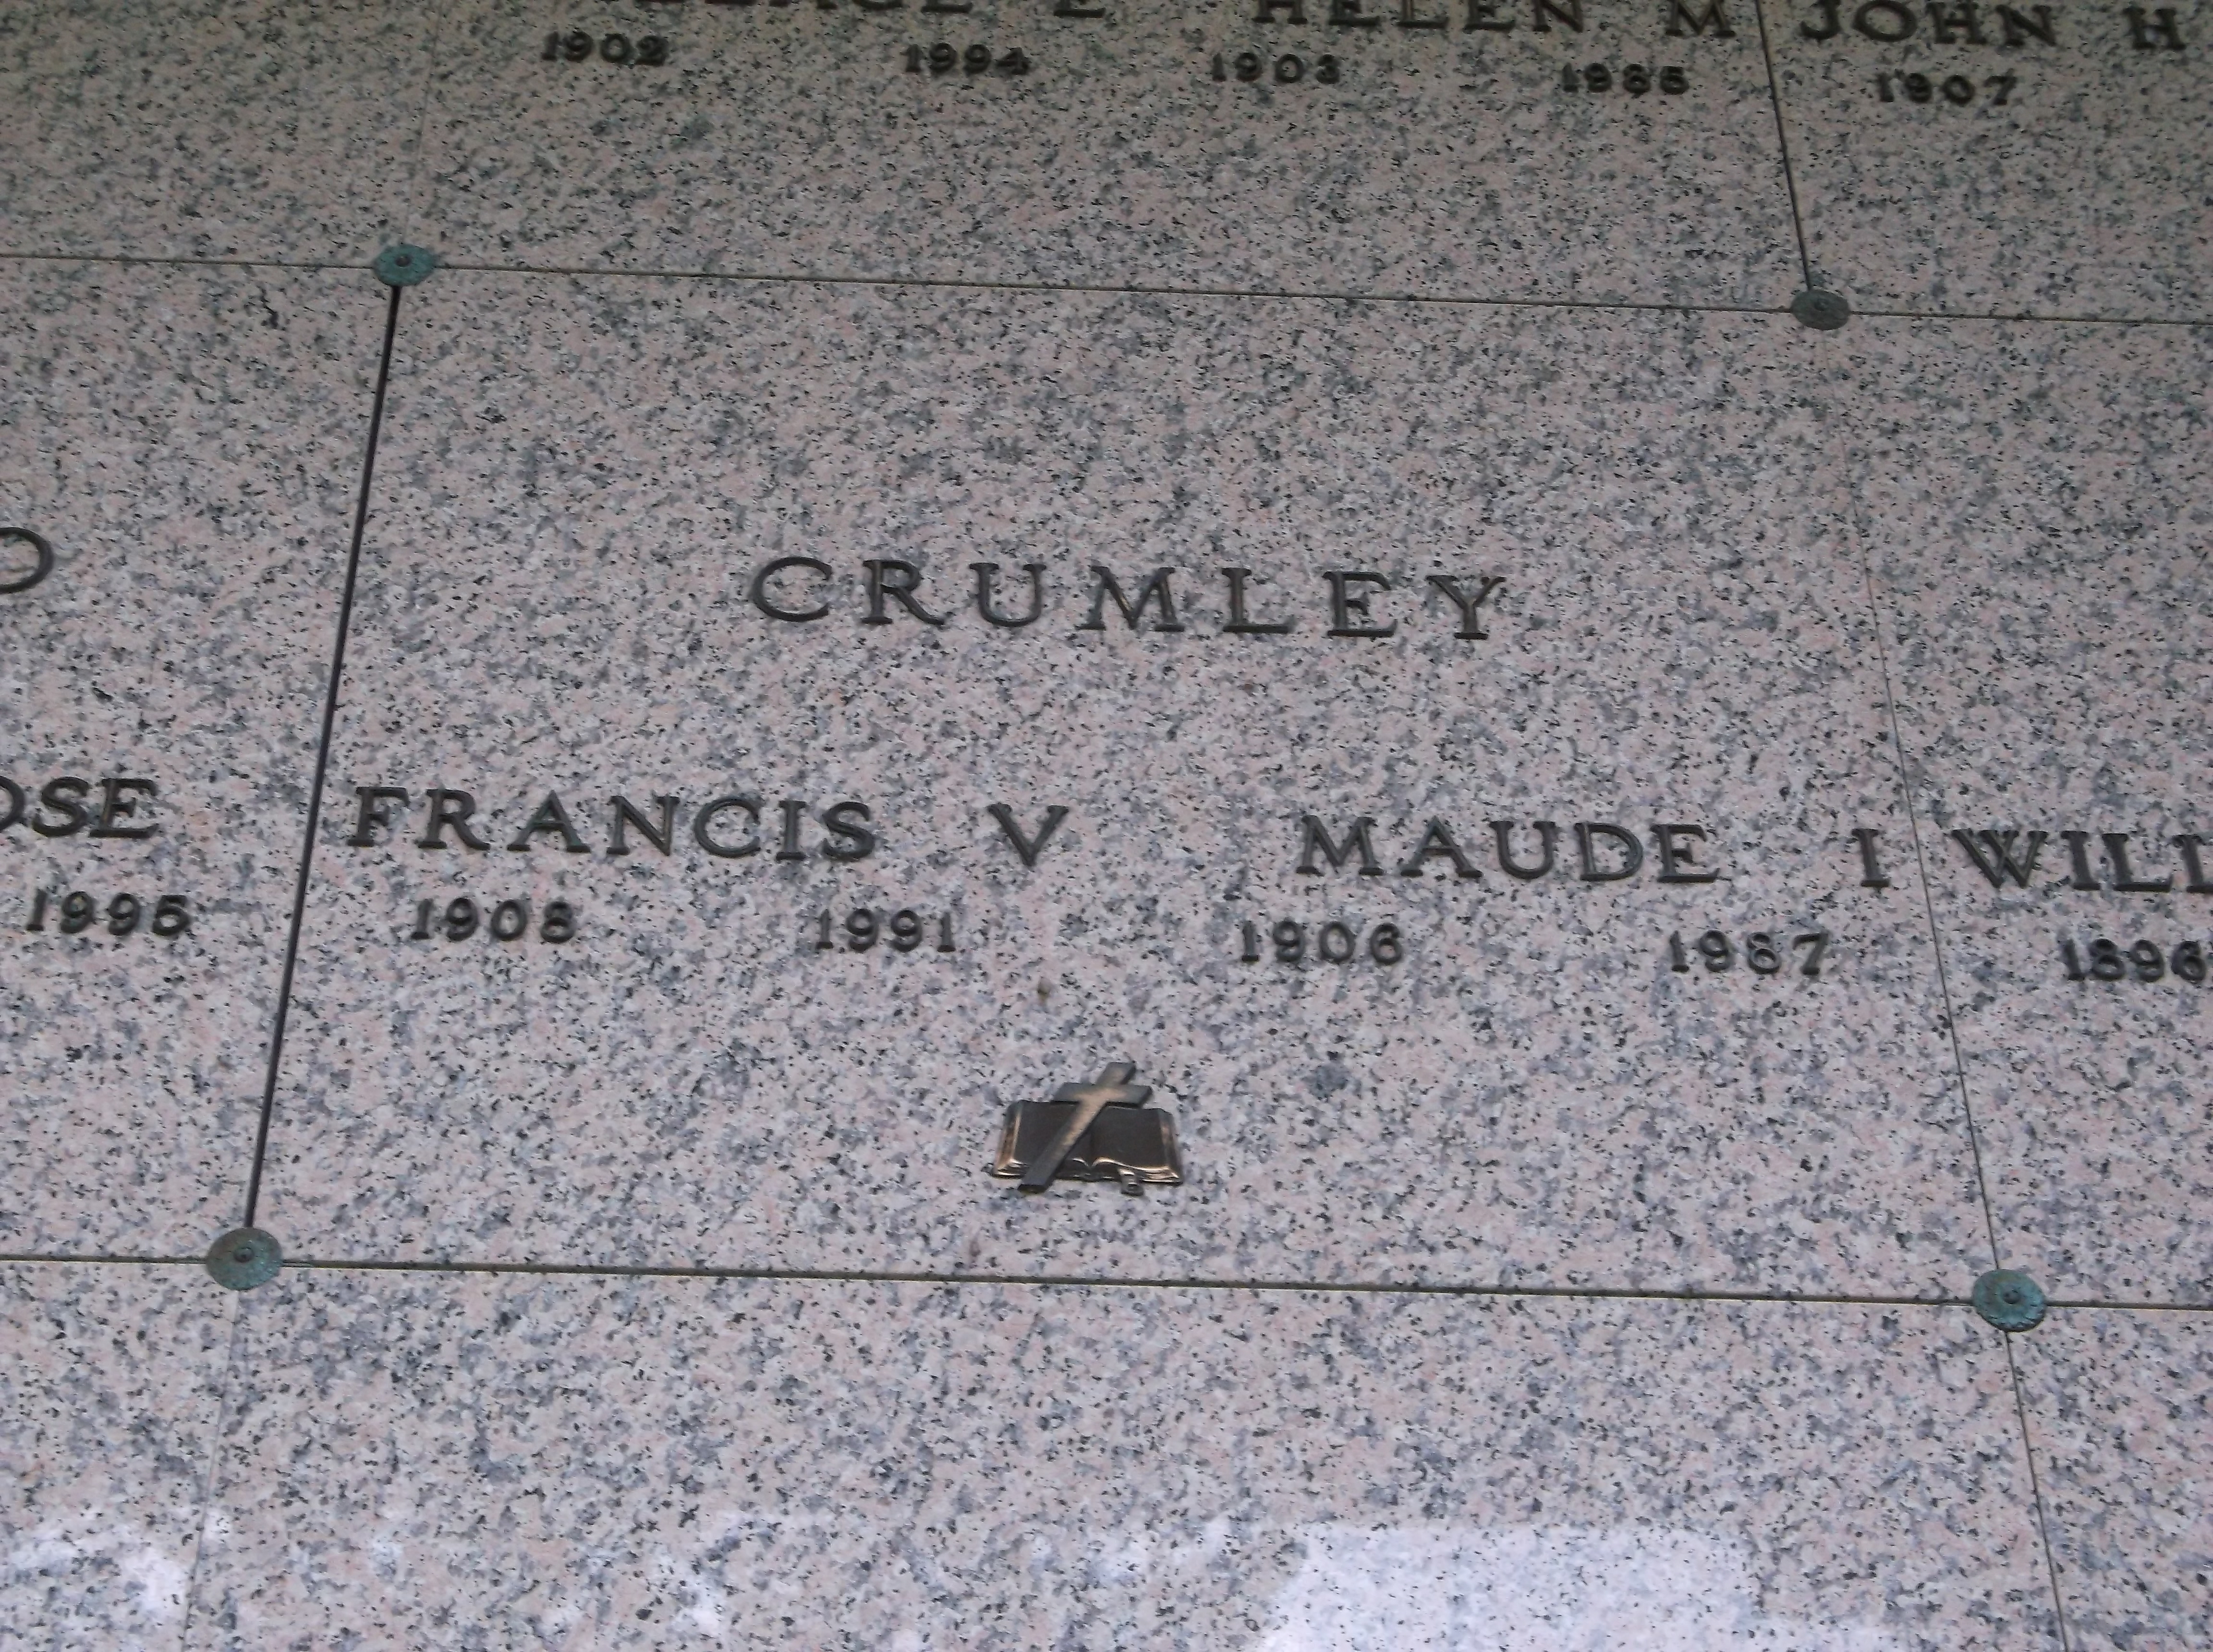 Francis V Crumley